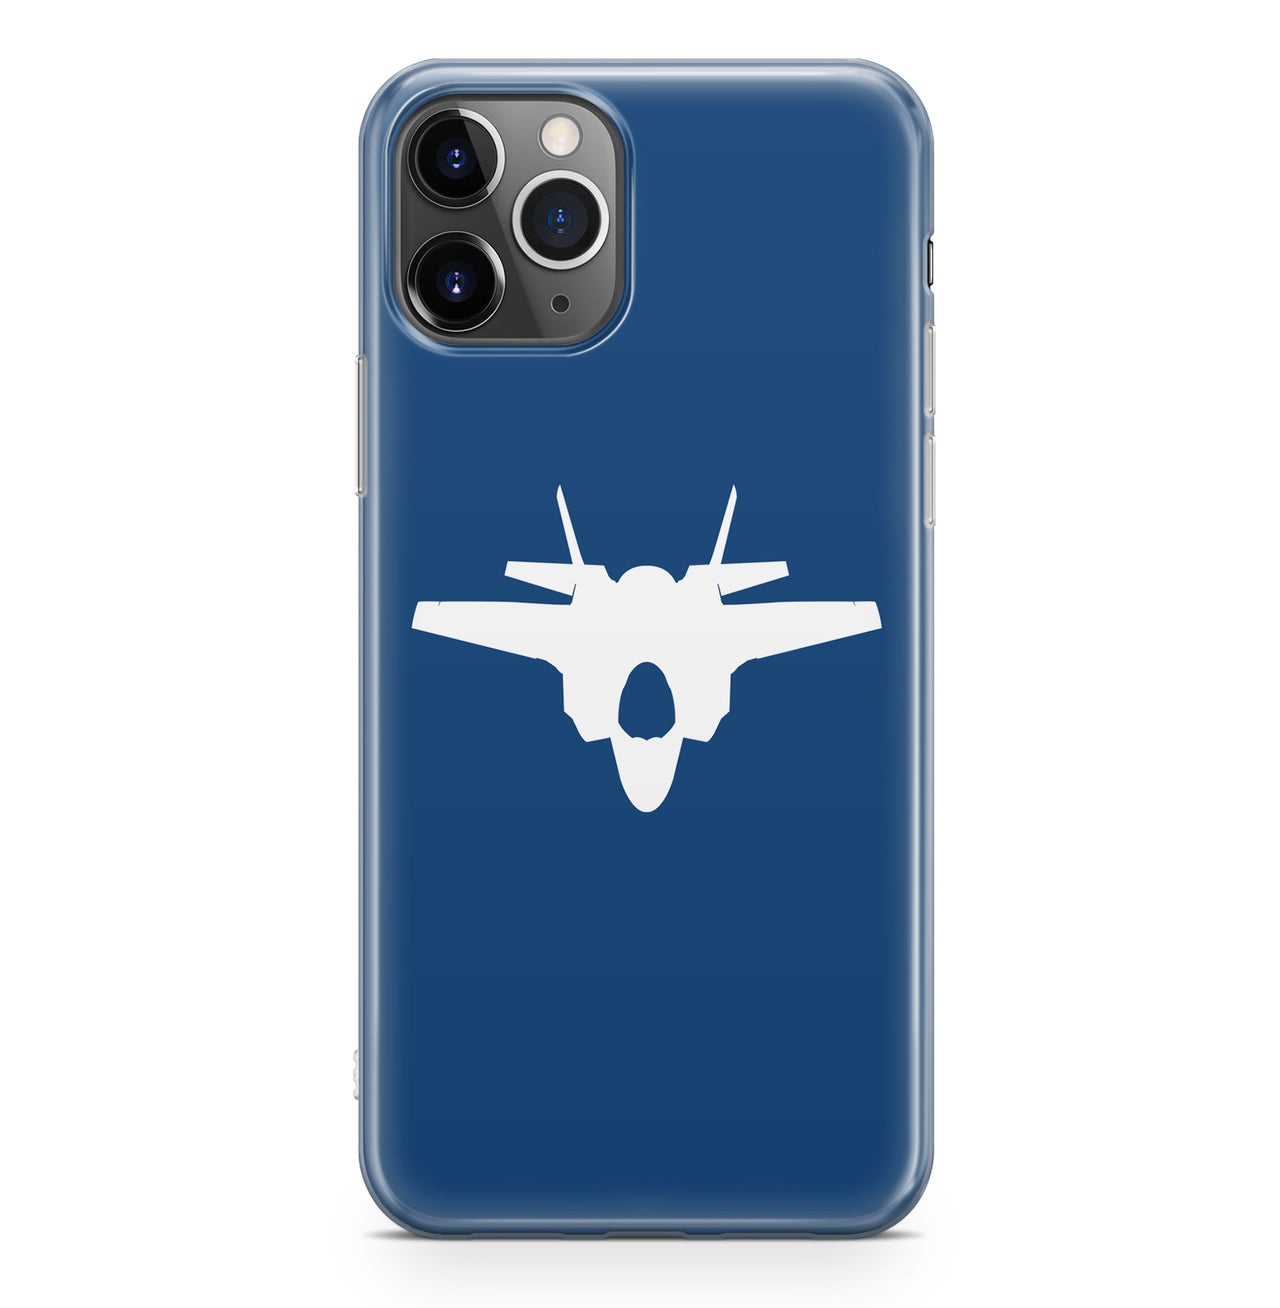 Lockheed Martin F-35 Lightning II Silhouette Designed iPhone Cases